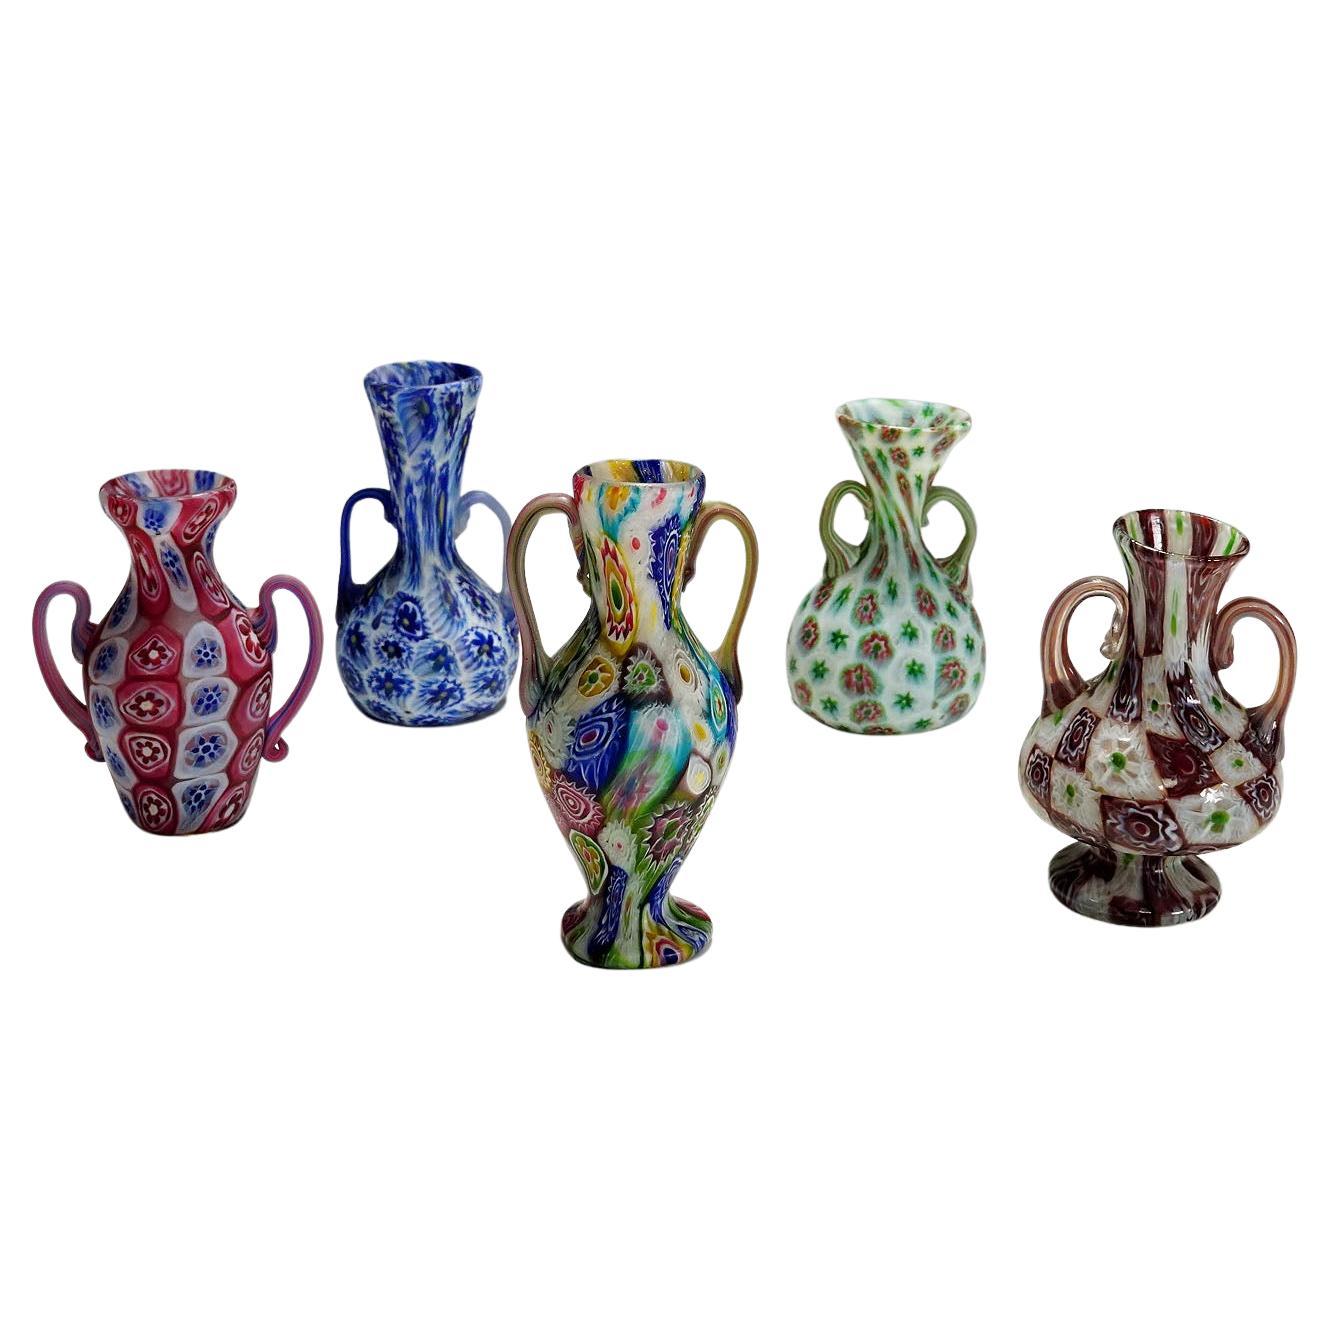 Satz handgefertigter Millefiori-Vasen von Fratelli Toso, Murano um 1910